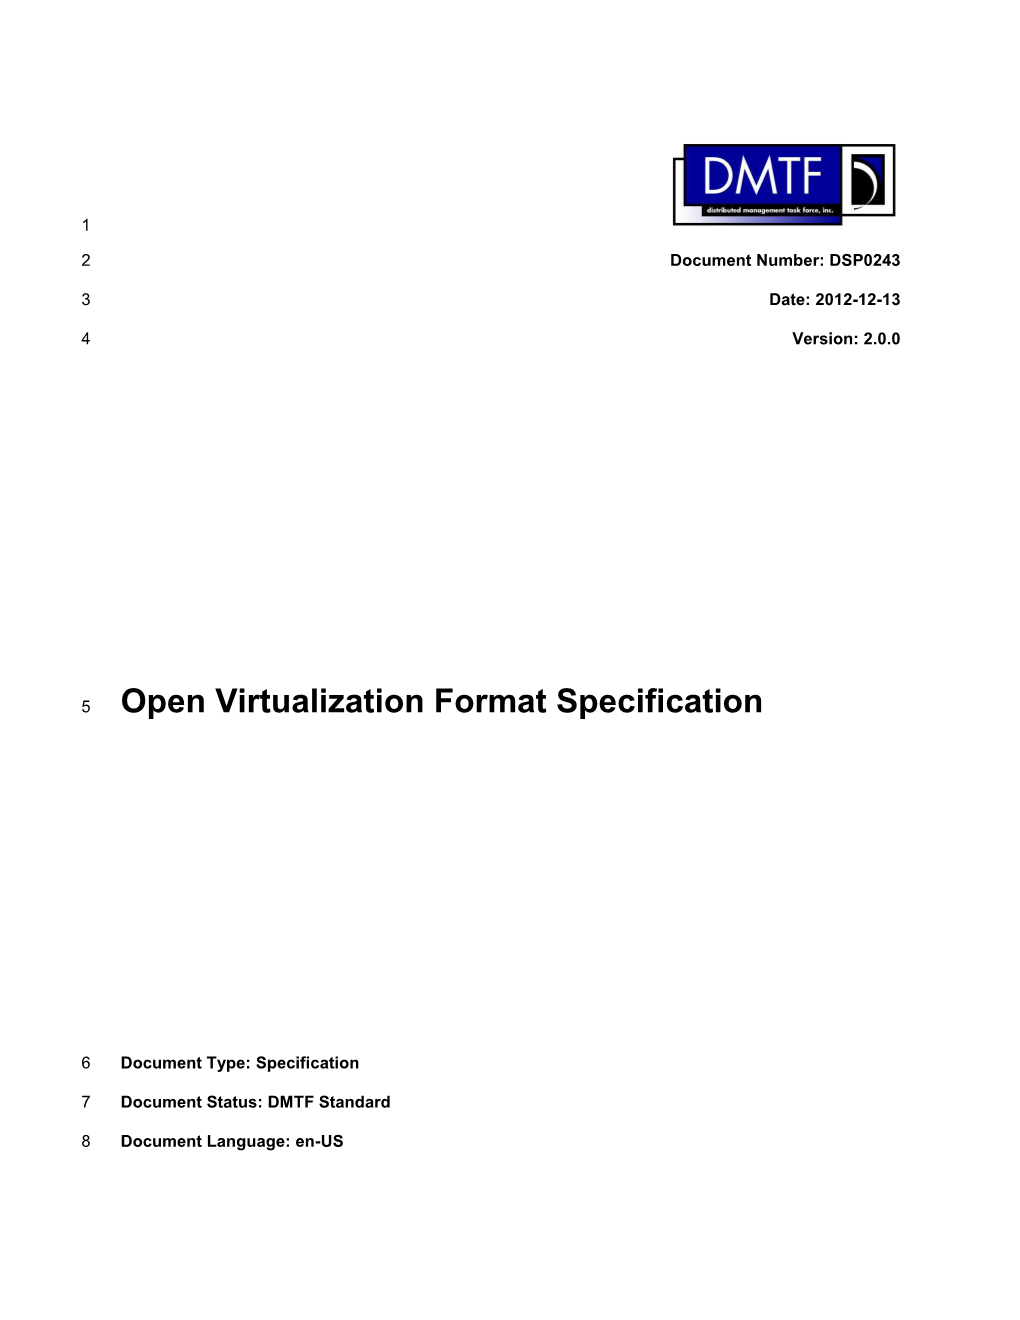 Open Virtualization Format Specification